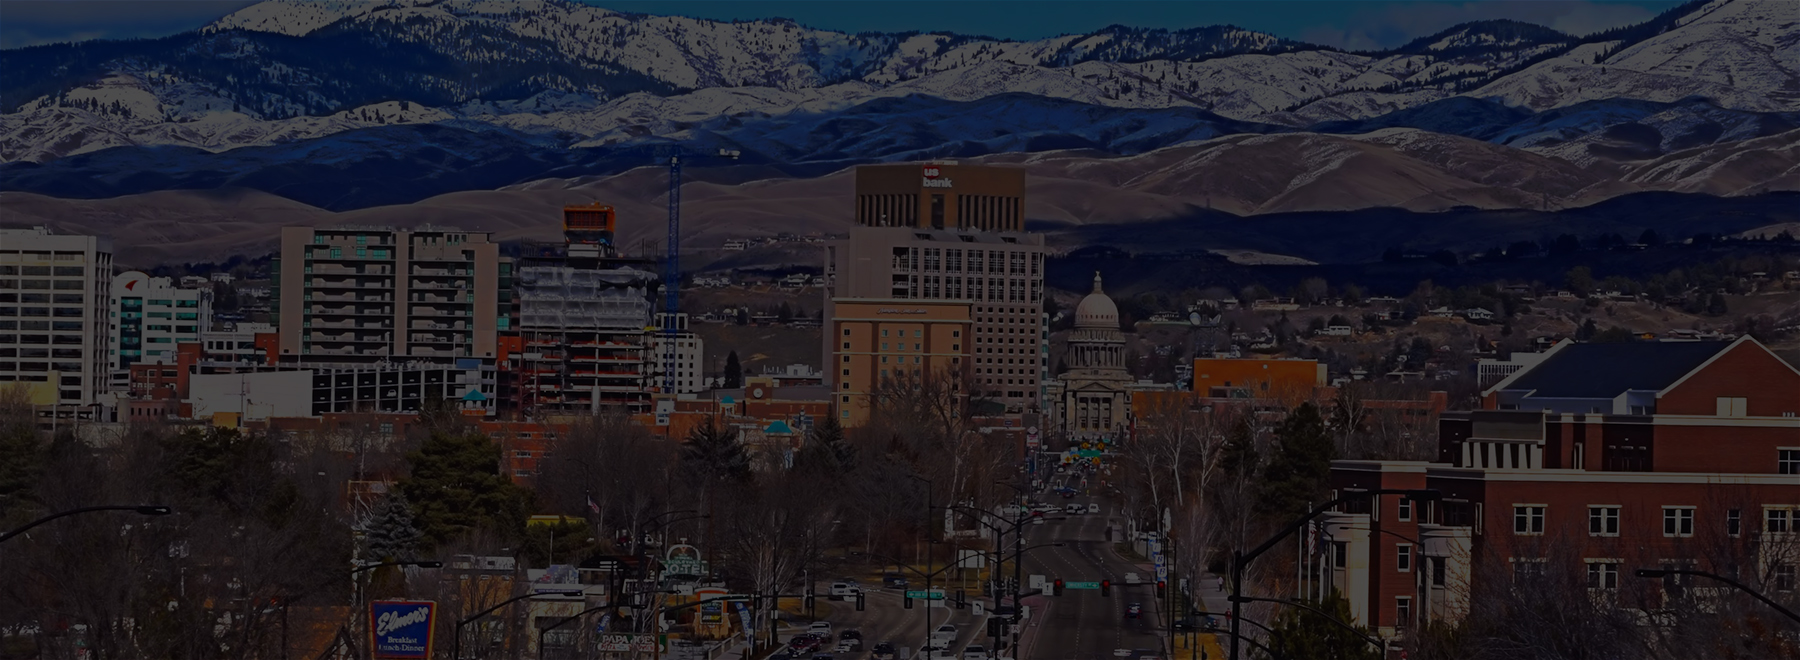 Chigbrow, Ryan & Company | Certified Public Accountants, Boise, Idaho